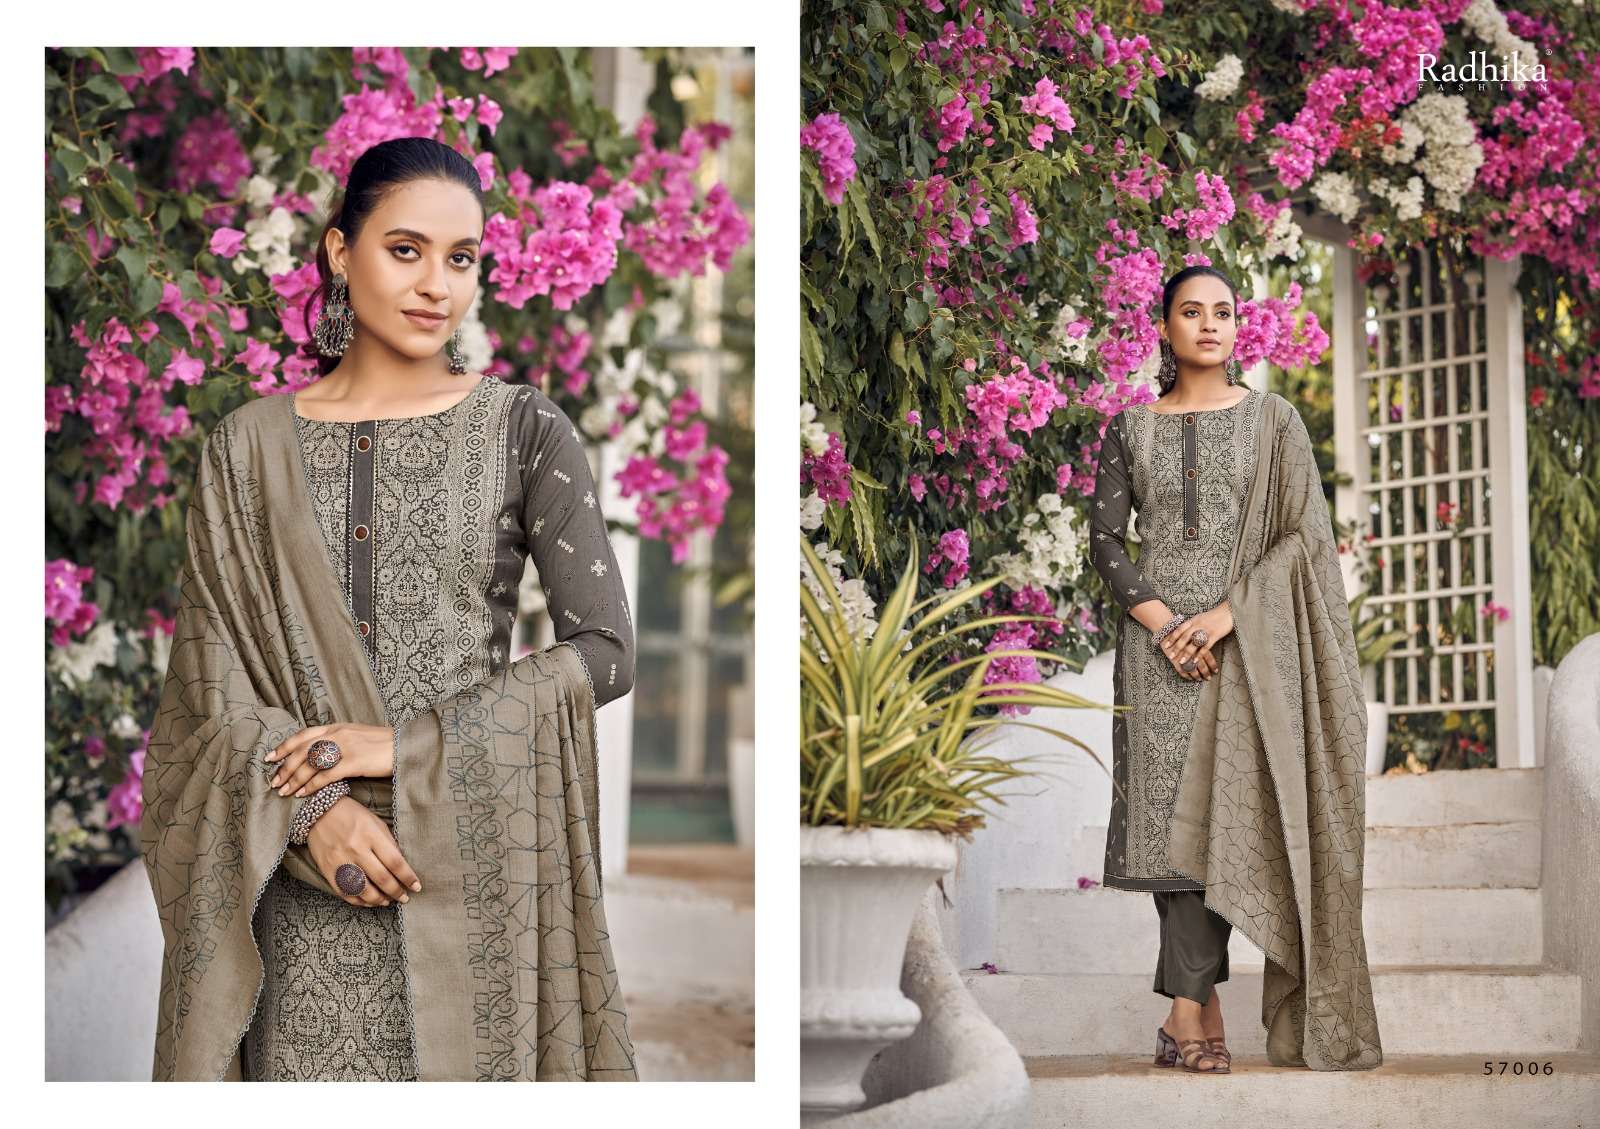 radhika fashion black berry vol-3 57001-57006 series trendy designer salwar kameez catalogue manufacturer surat